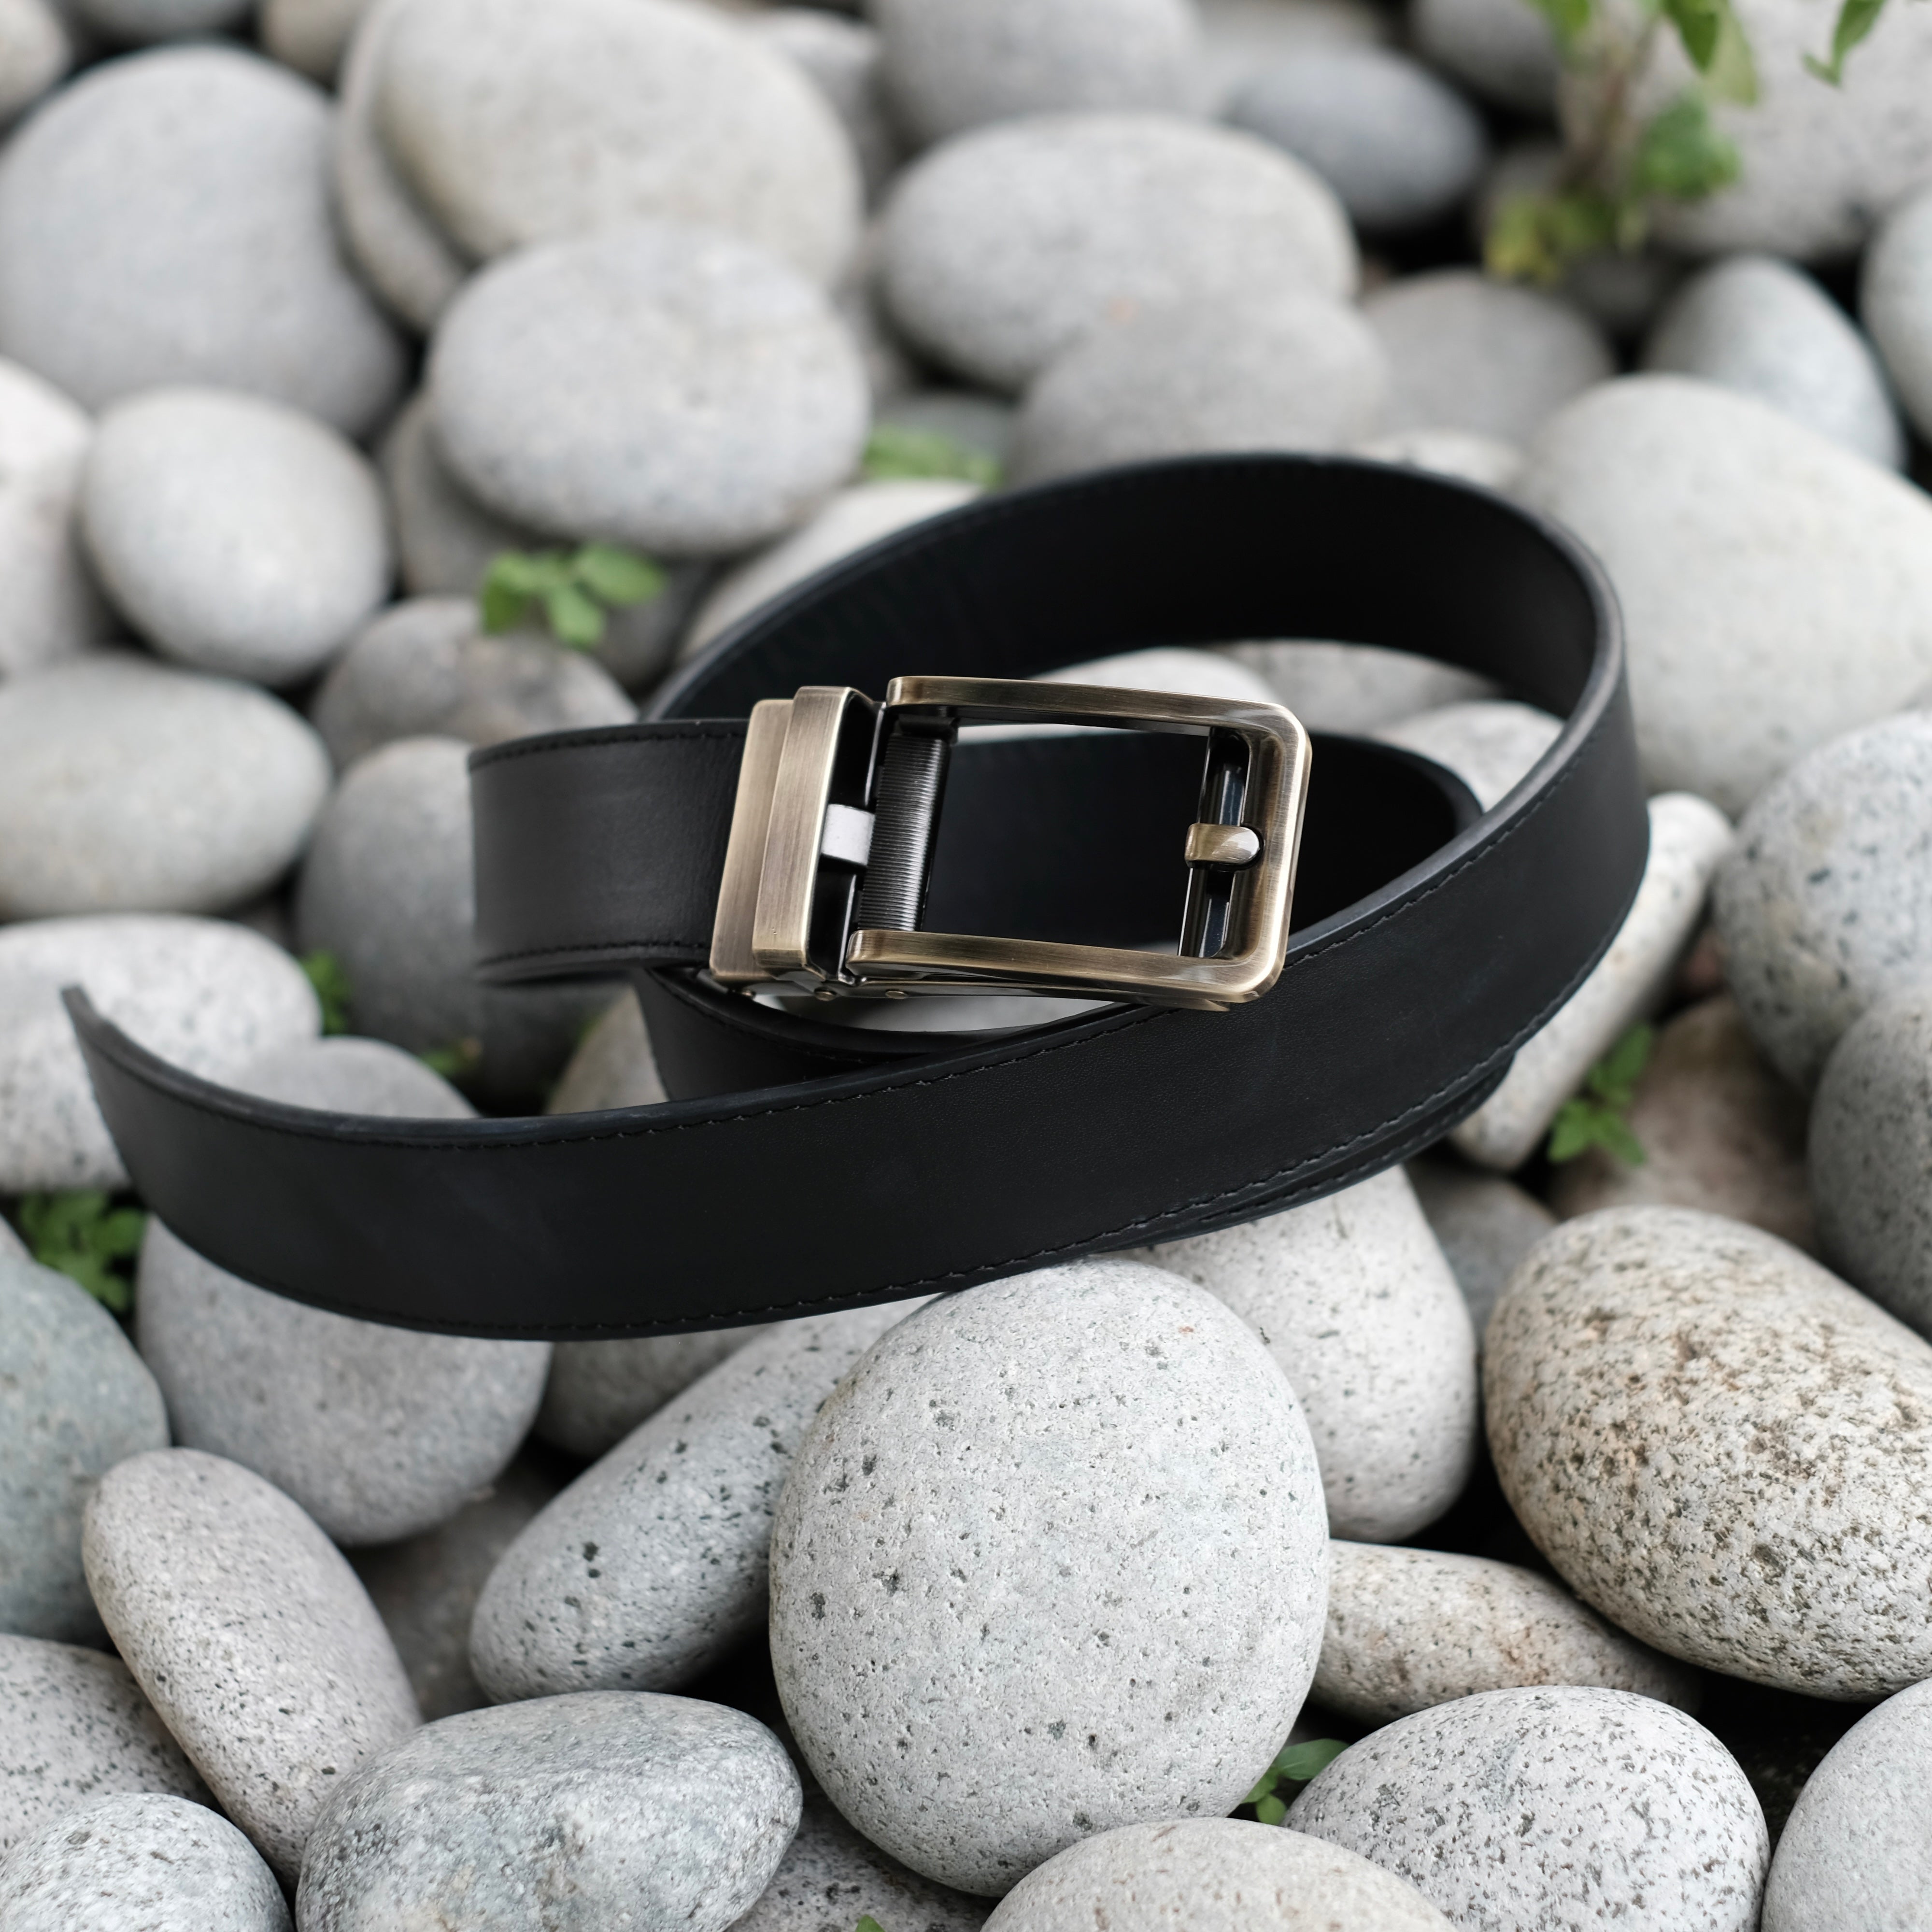 Luxe Silver Buckle with Full Grain Leather Belt - CINCH BELTS